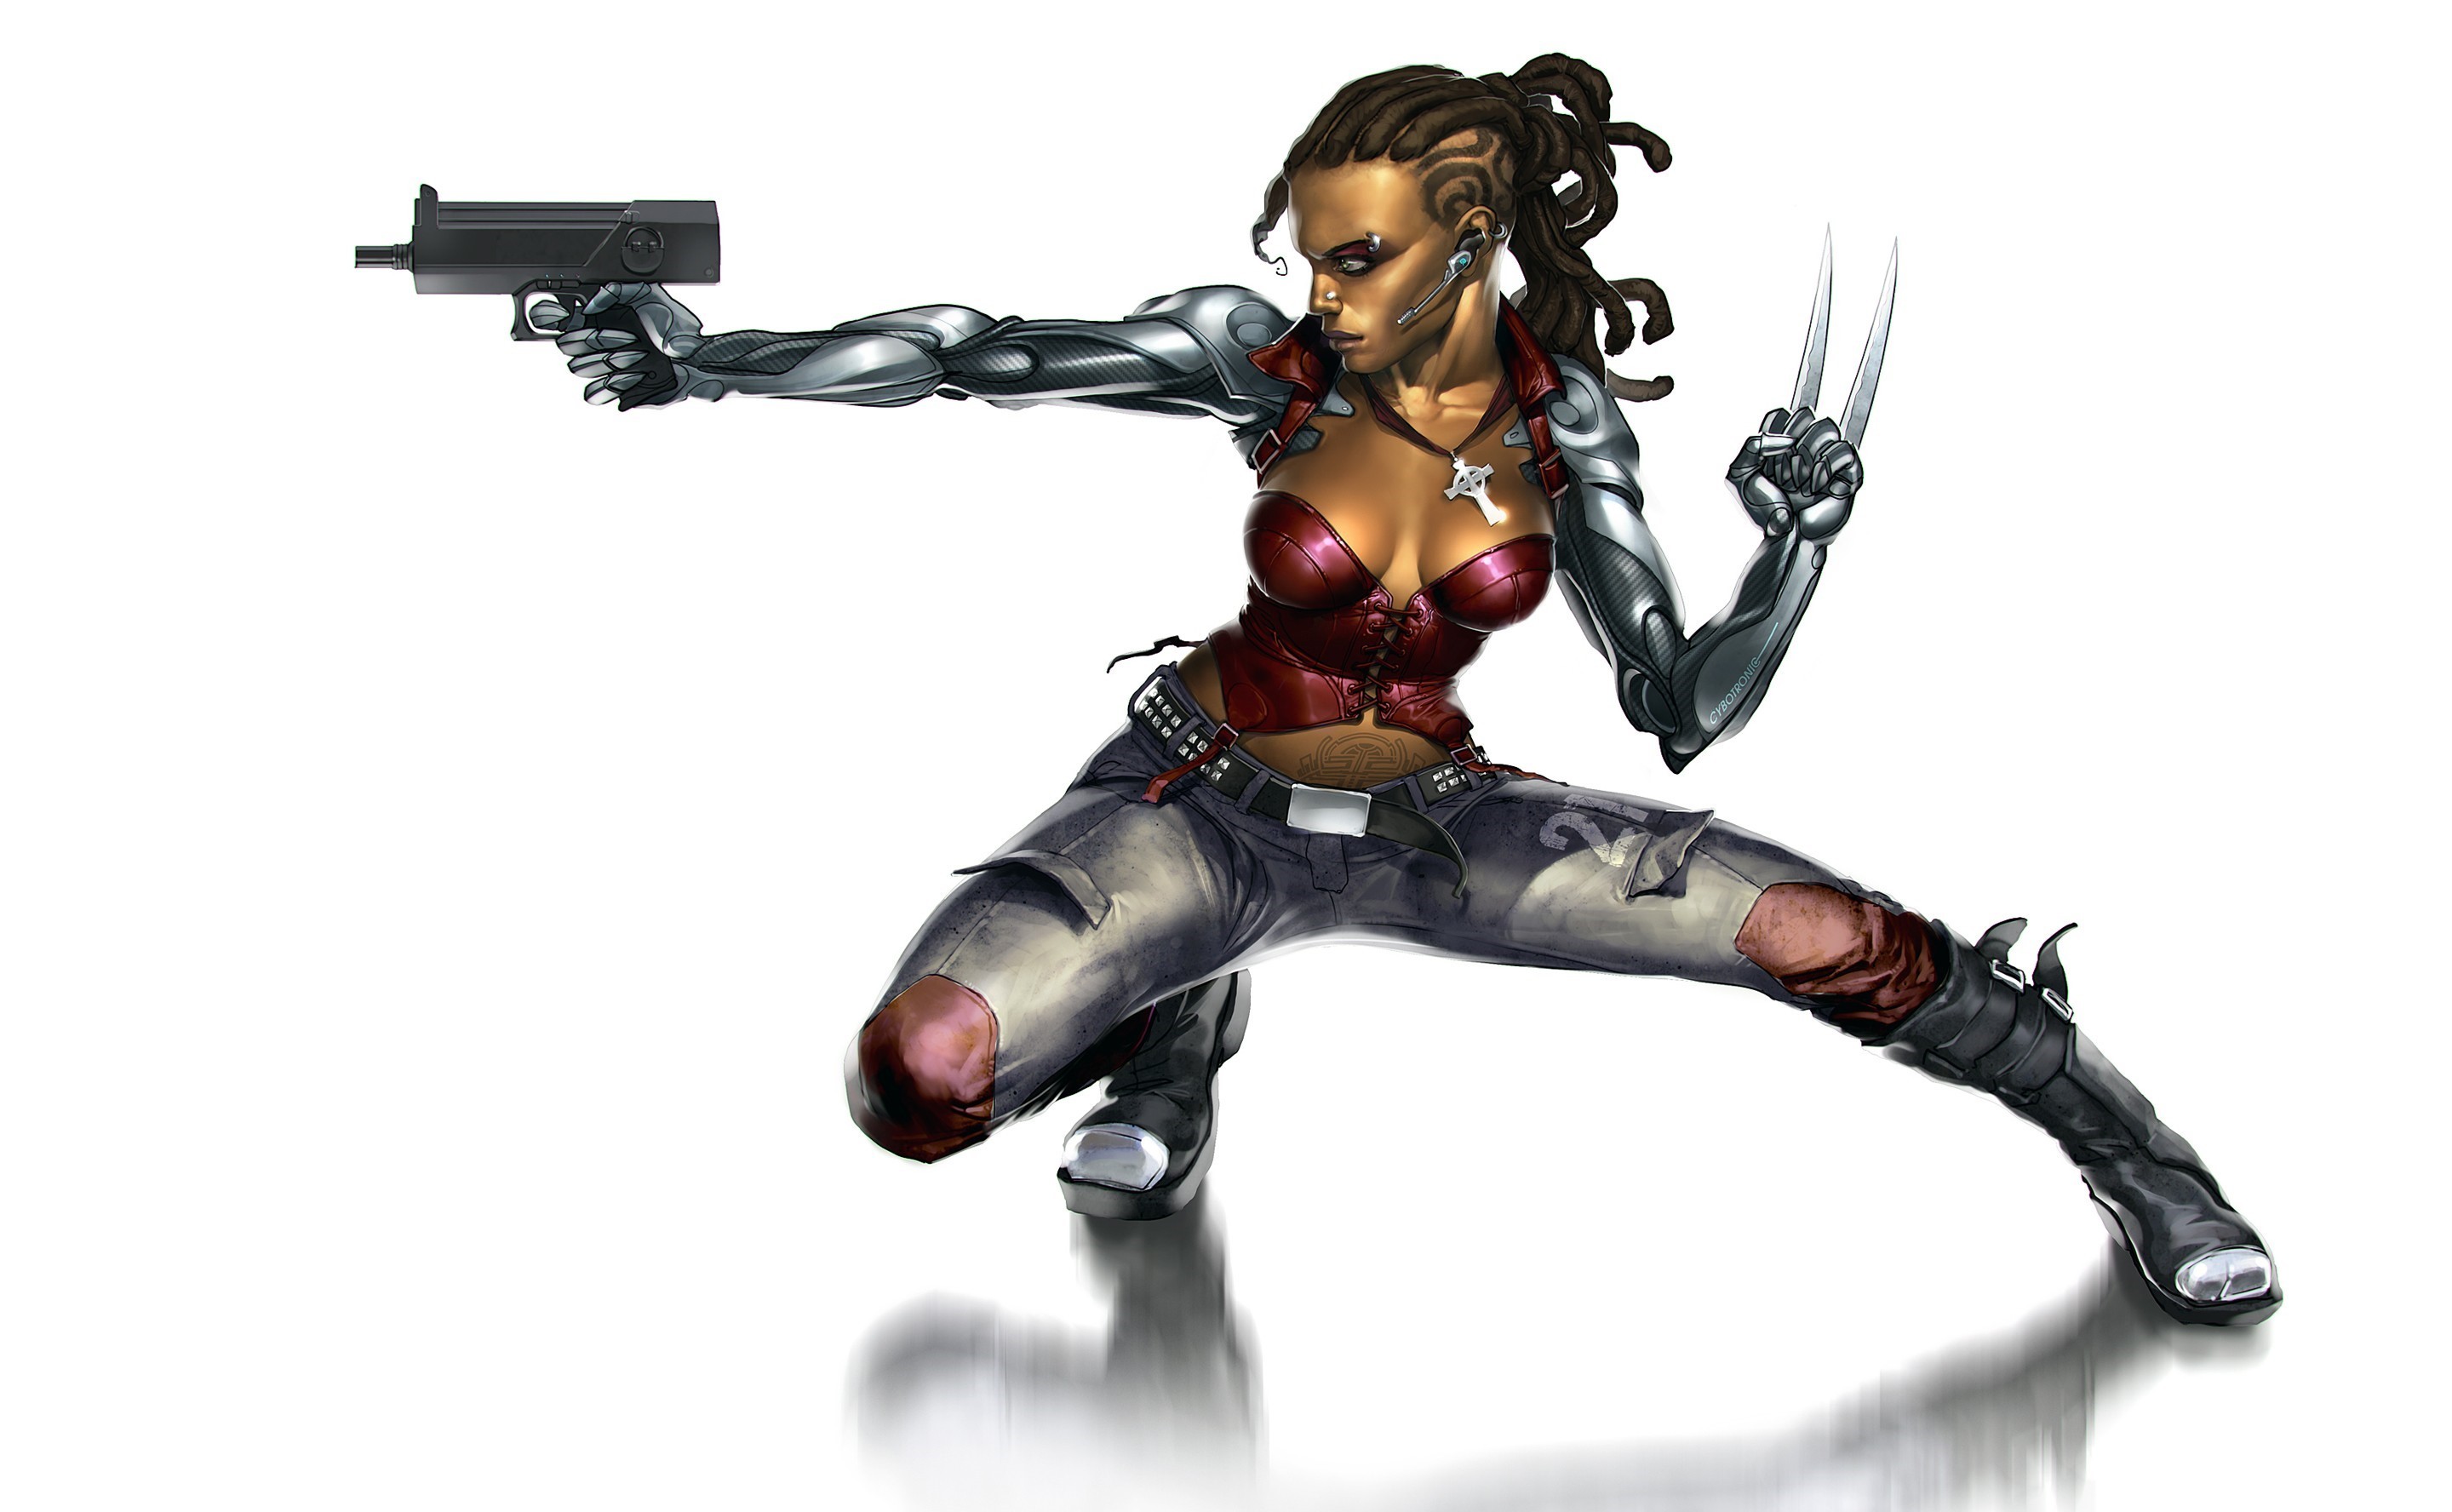 General 2880x1776 Shadowrun artwork dark skin women boobs cyborg claws spread legs simple background white background gun weapon futuristic science fiction women science fiction girls with guns